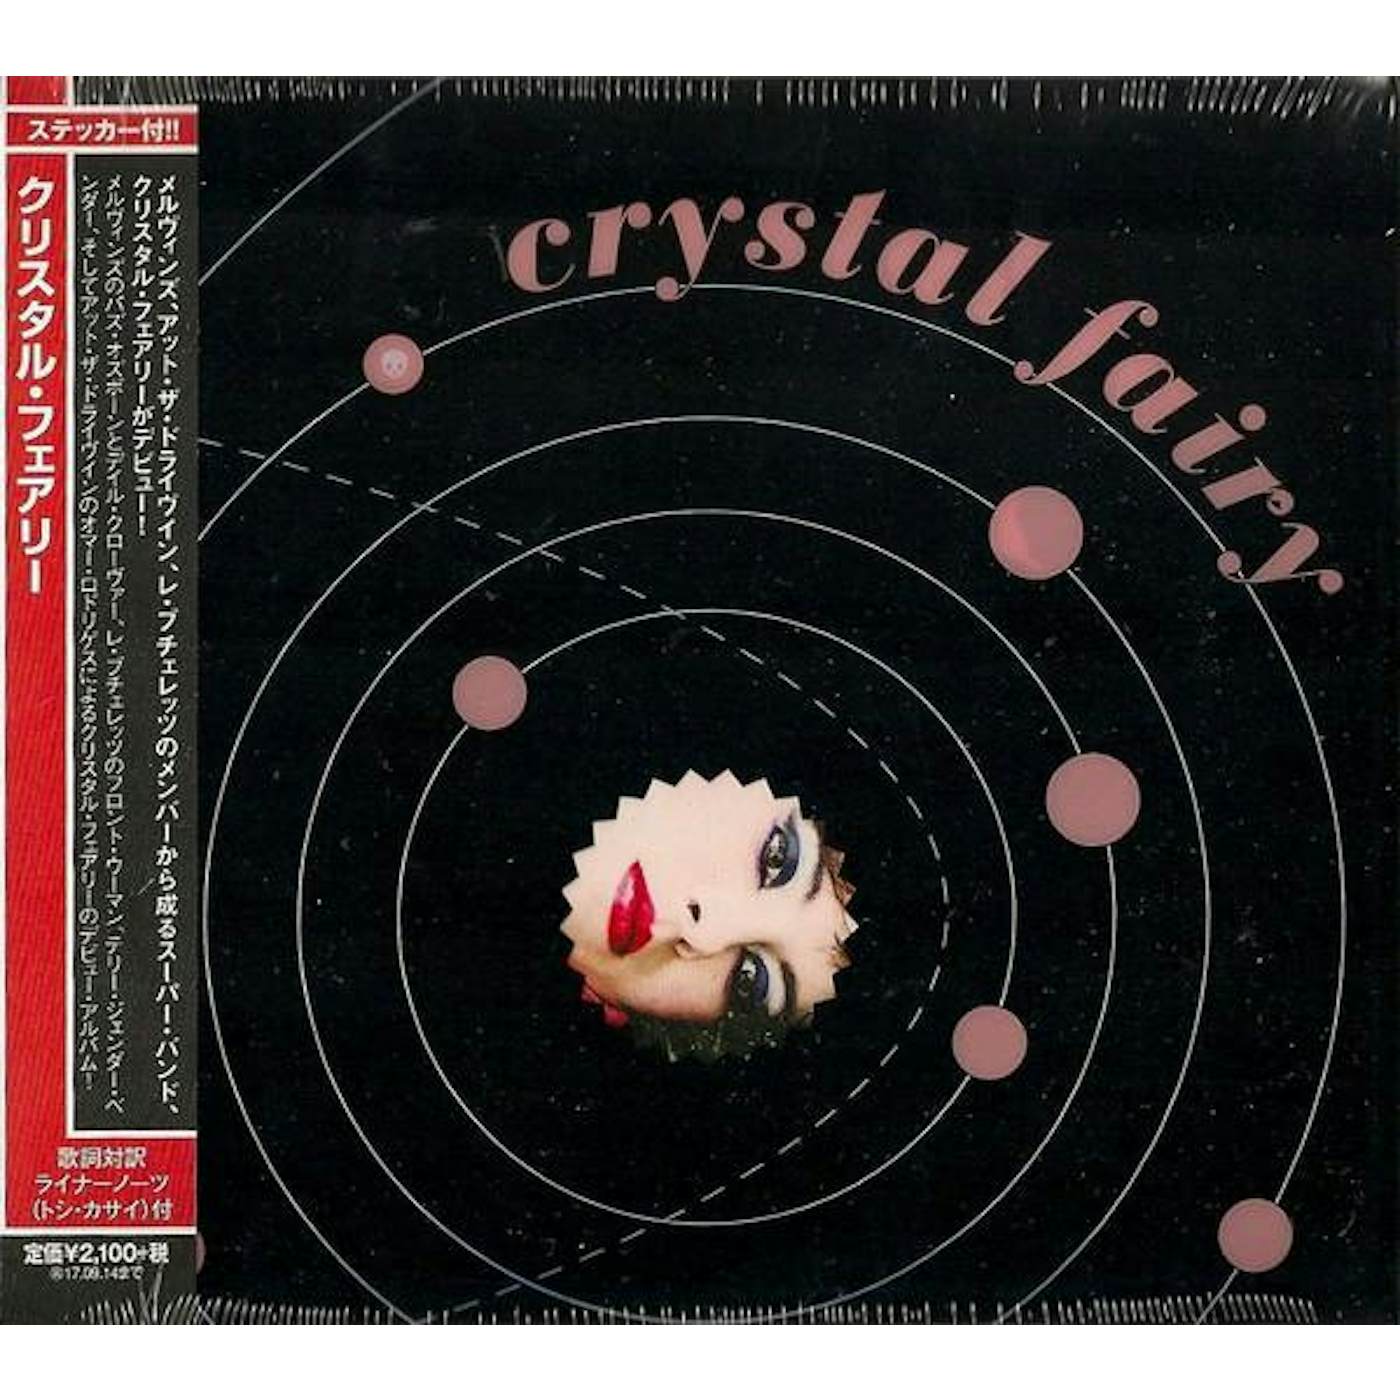 CRYSTAL FAIRY (BONUS TRACK/STICKER) CD